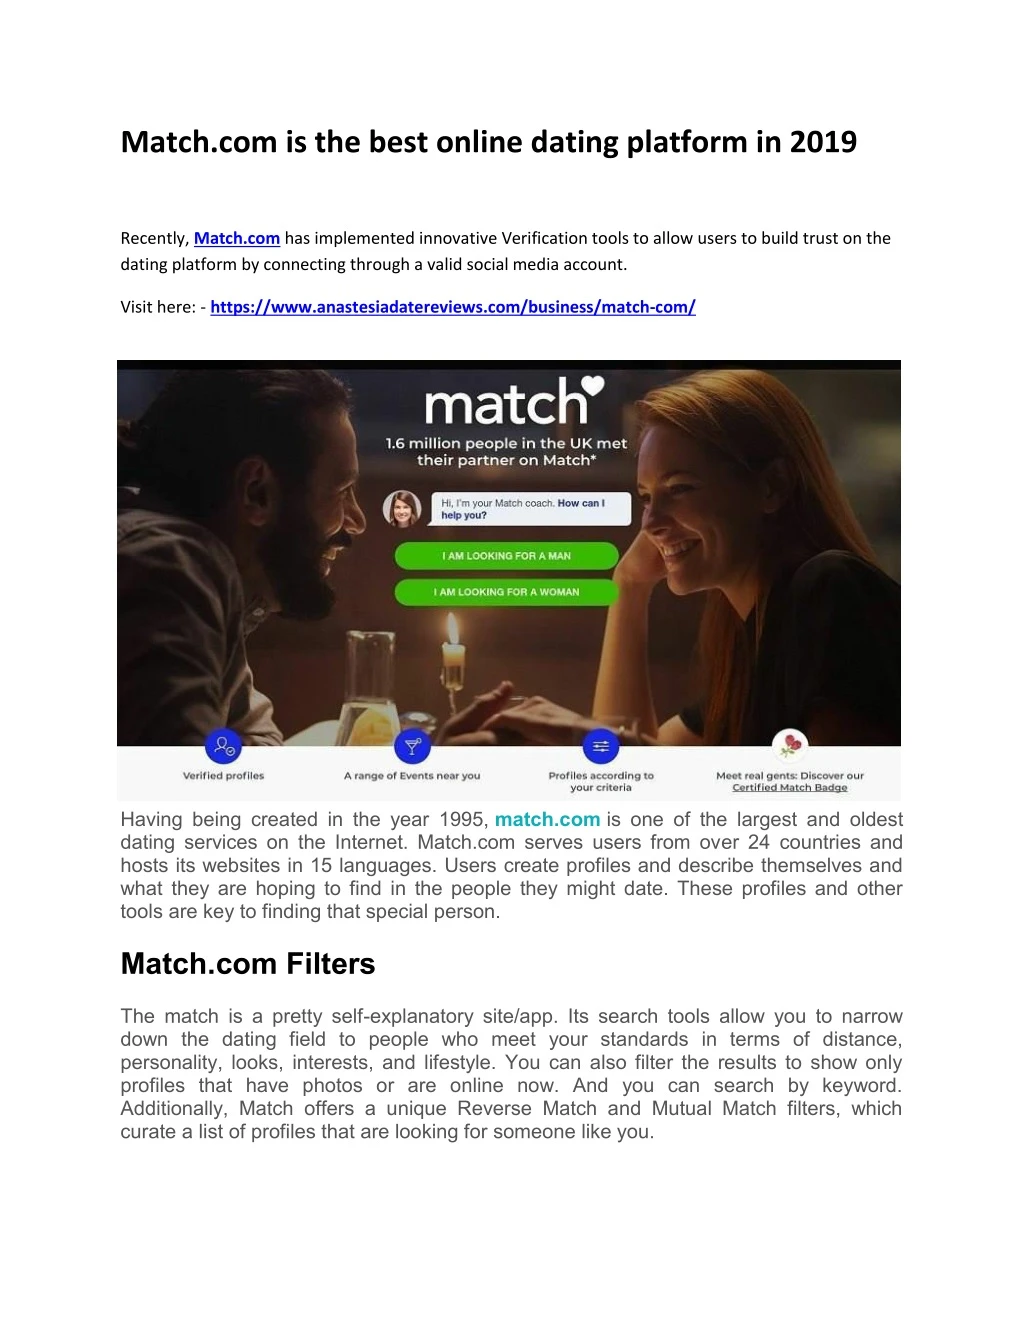 match com is the best online dating platform